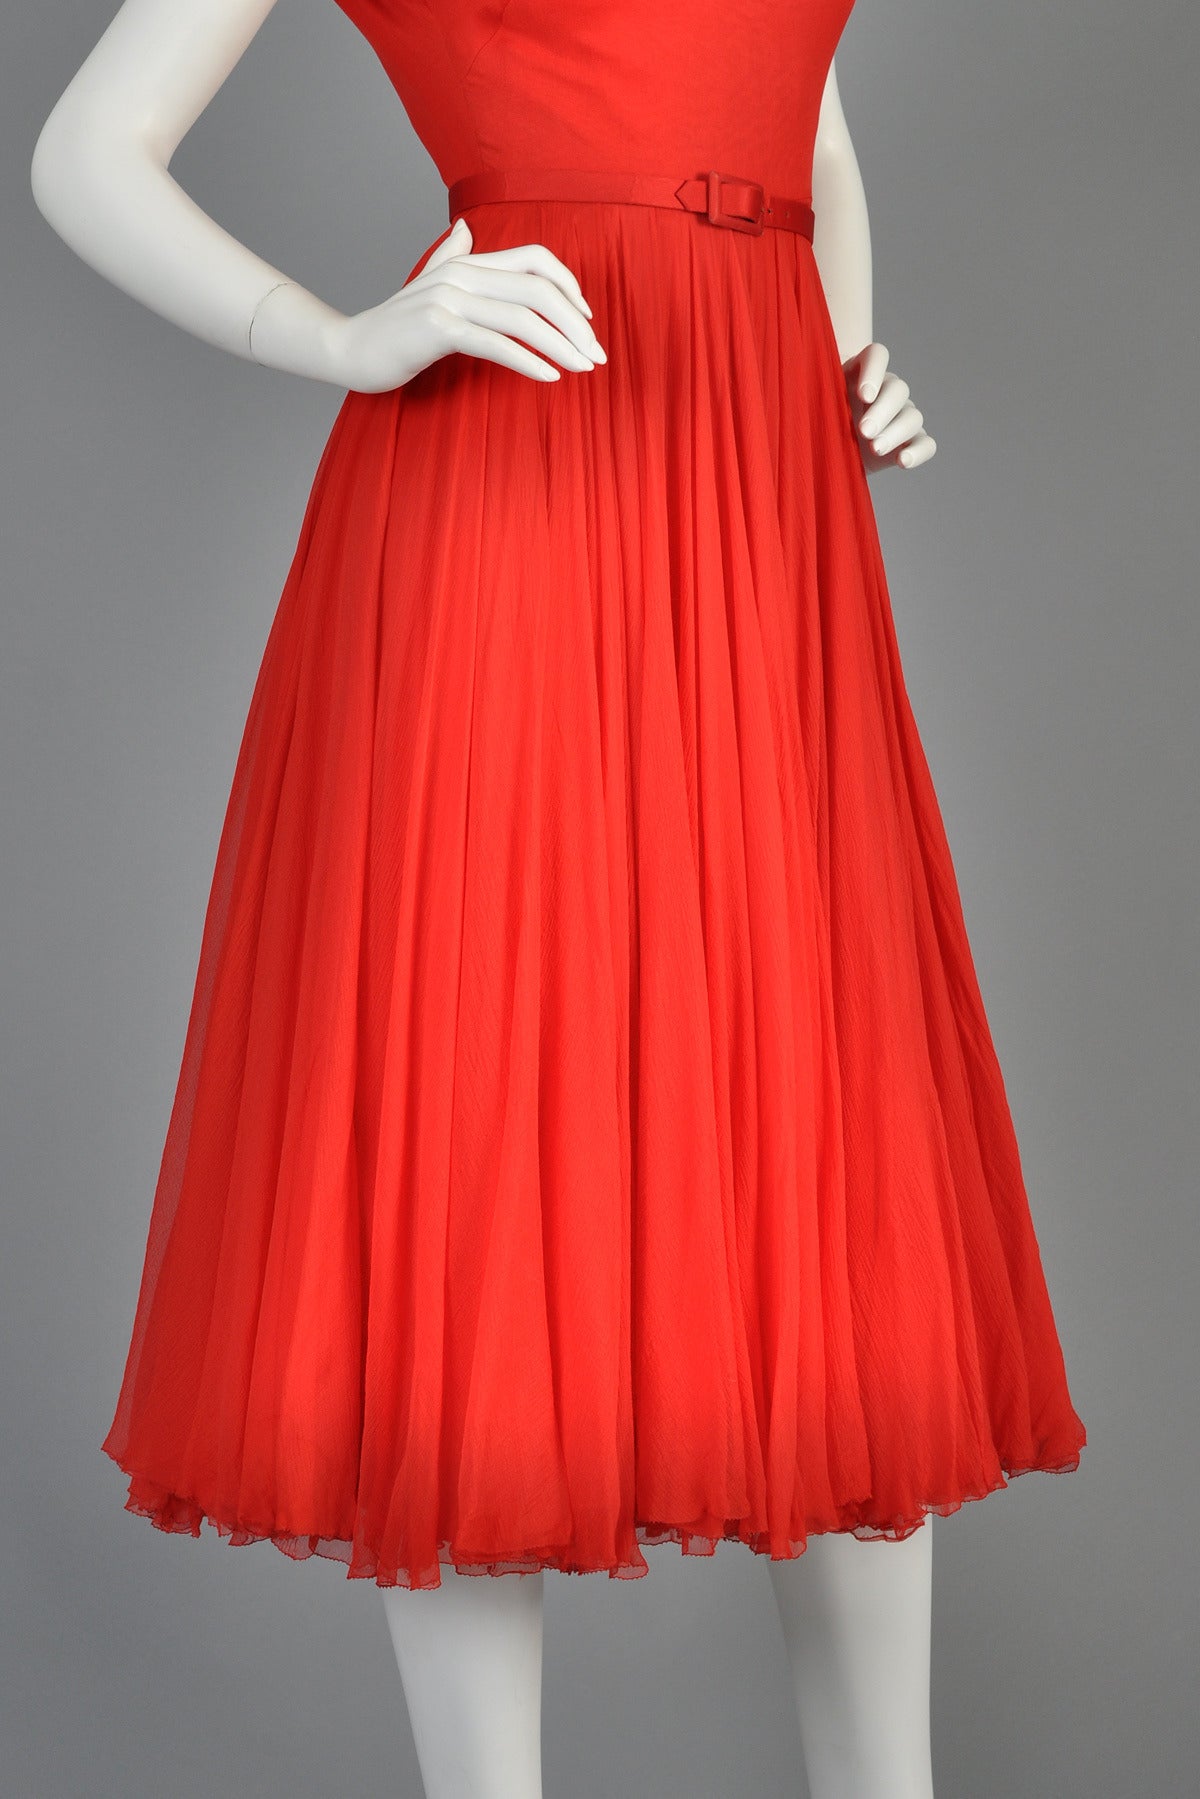 Circa 1951 James Galanos Cherry Red Silk Chiffon Party Dress 3